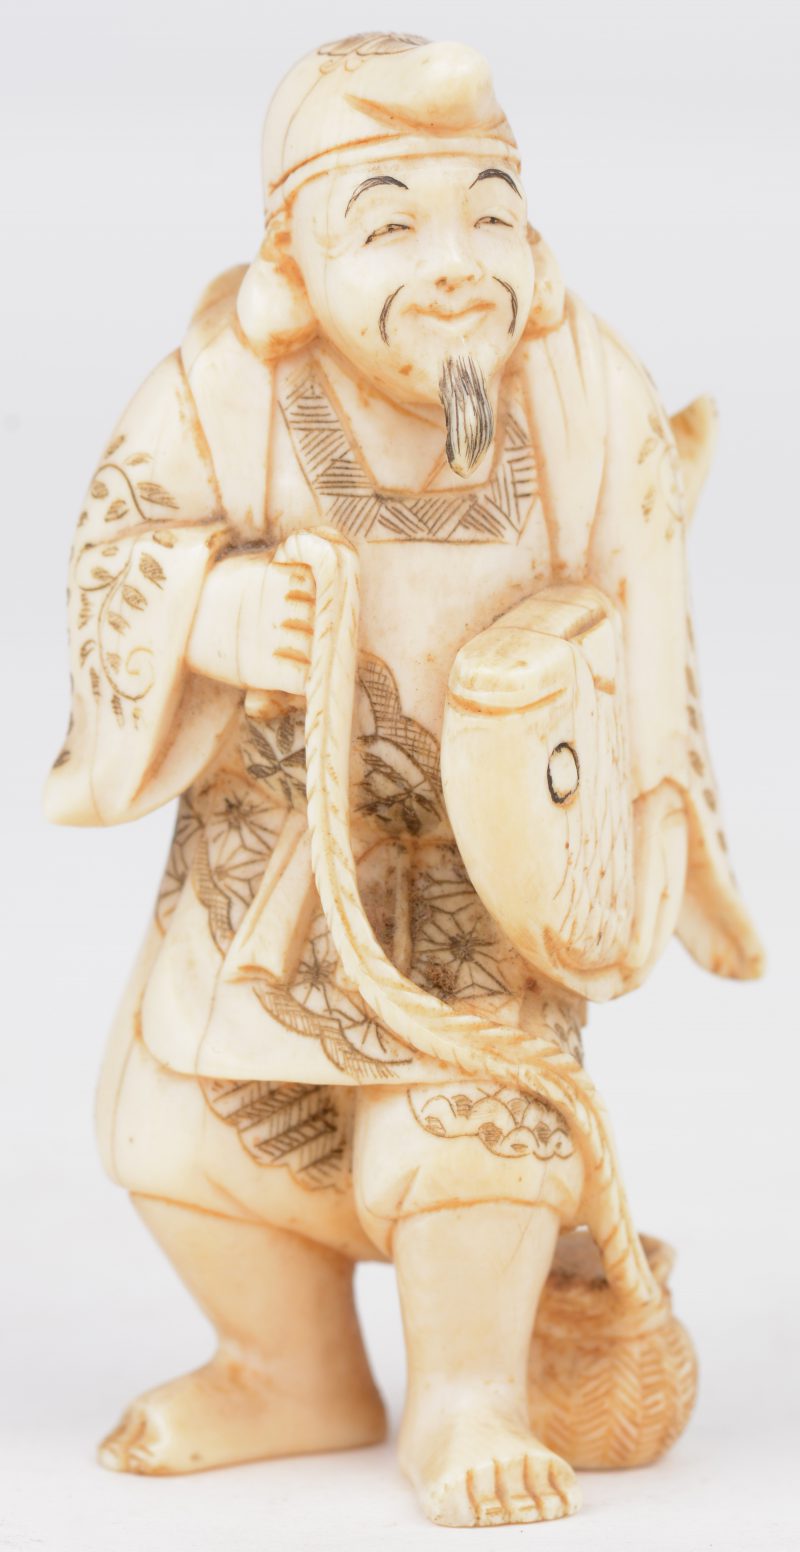 “Visser met grote karper”. Okimono van gebeeldhouwd ivoor. Japans werk omstreeks 1900. Onderaan gemerkt.